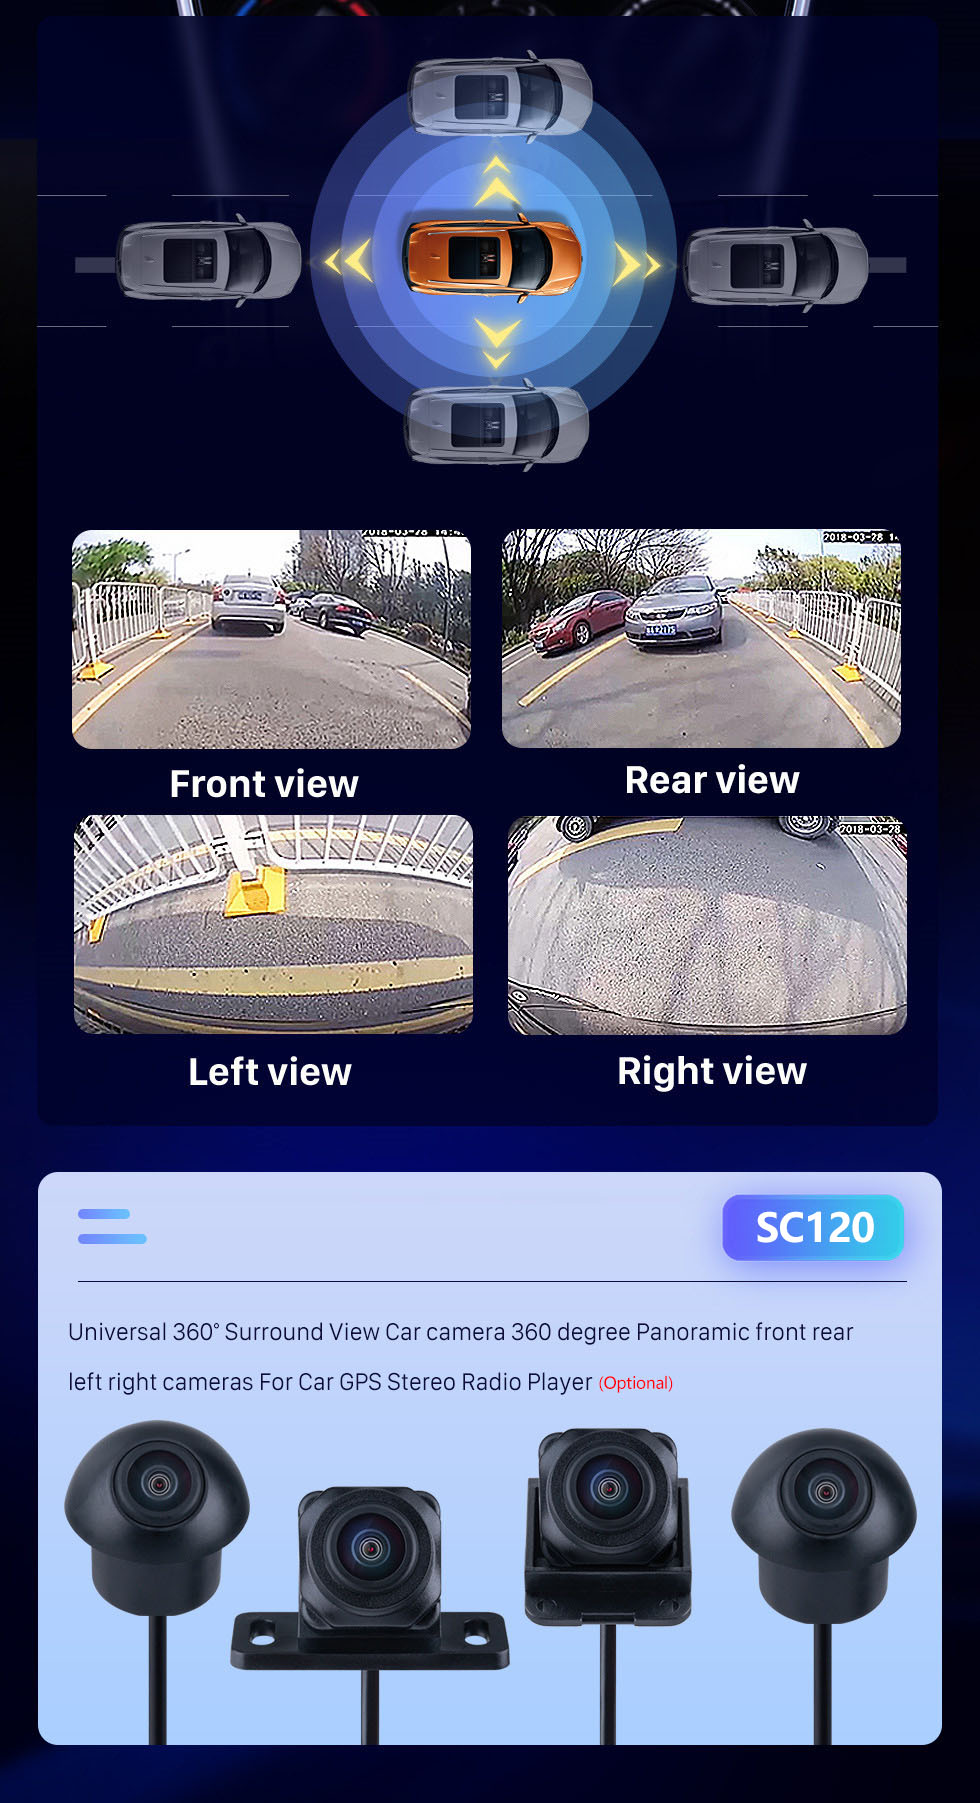 Seicane HD Touchscreen für Mazda 6 Radio Android 10.0 9,7 Zoll GPS Navigationssystem mit Bluetooth USB Unterstützung Digital TV Carplay